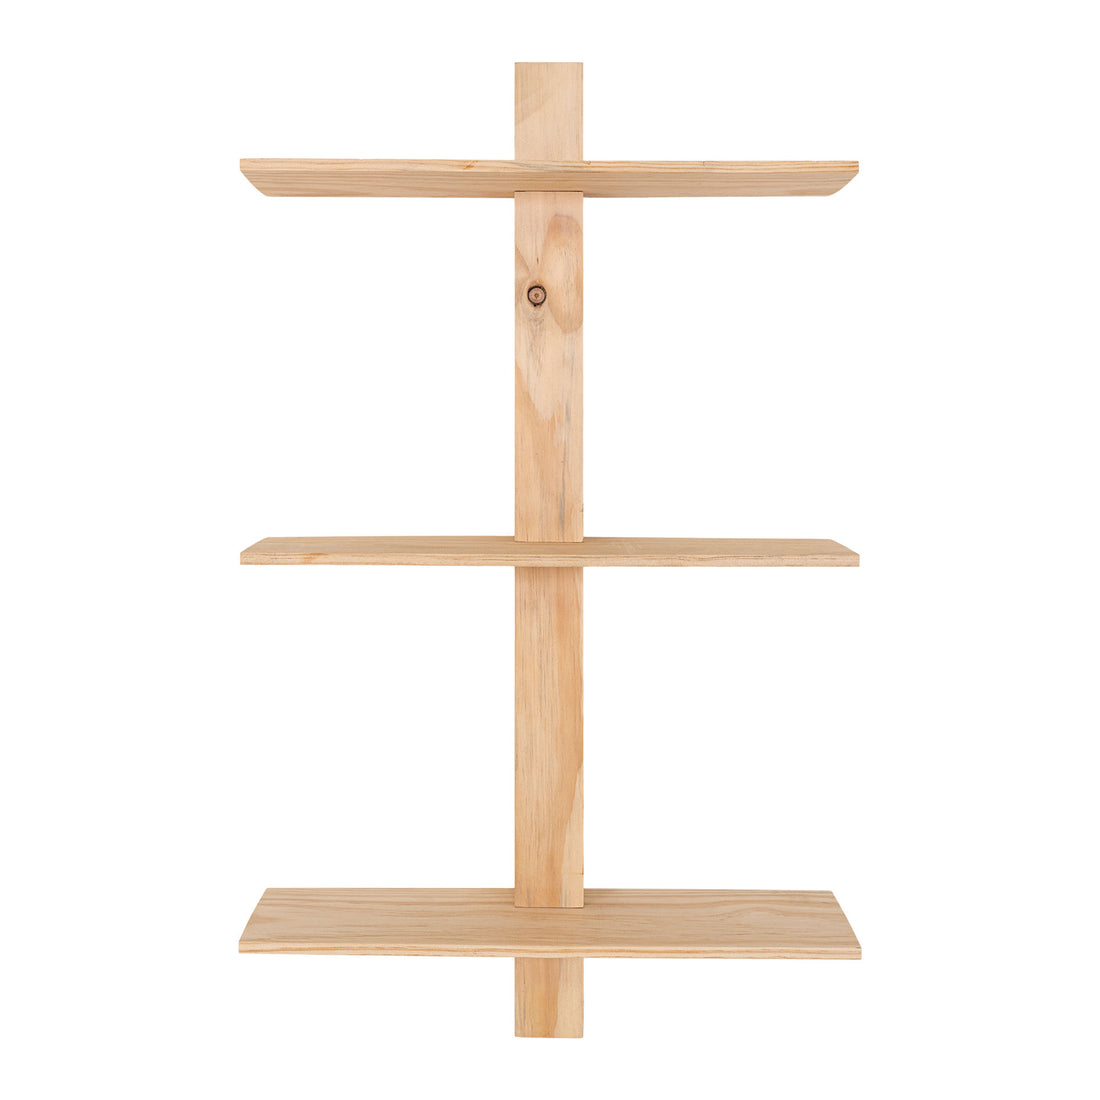 Almelo Shelf - Wall Shelf with 3 Shelves in Natural Wood 21x55x72 cm - 1 - Pcs